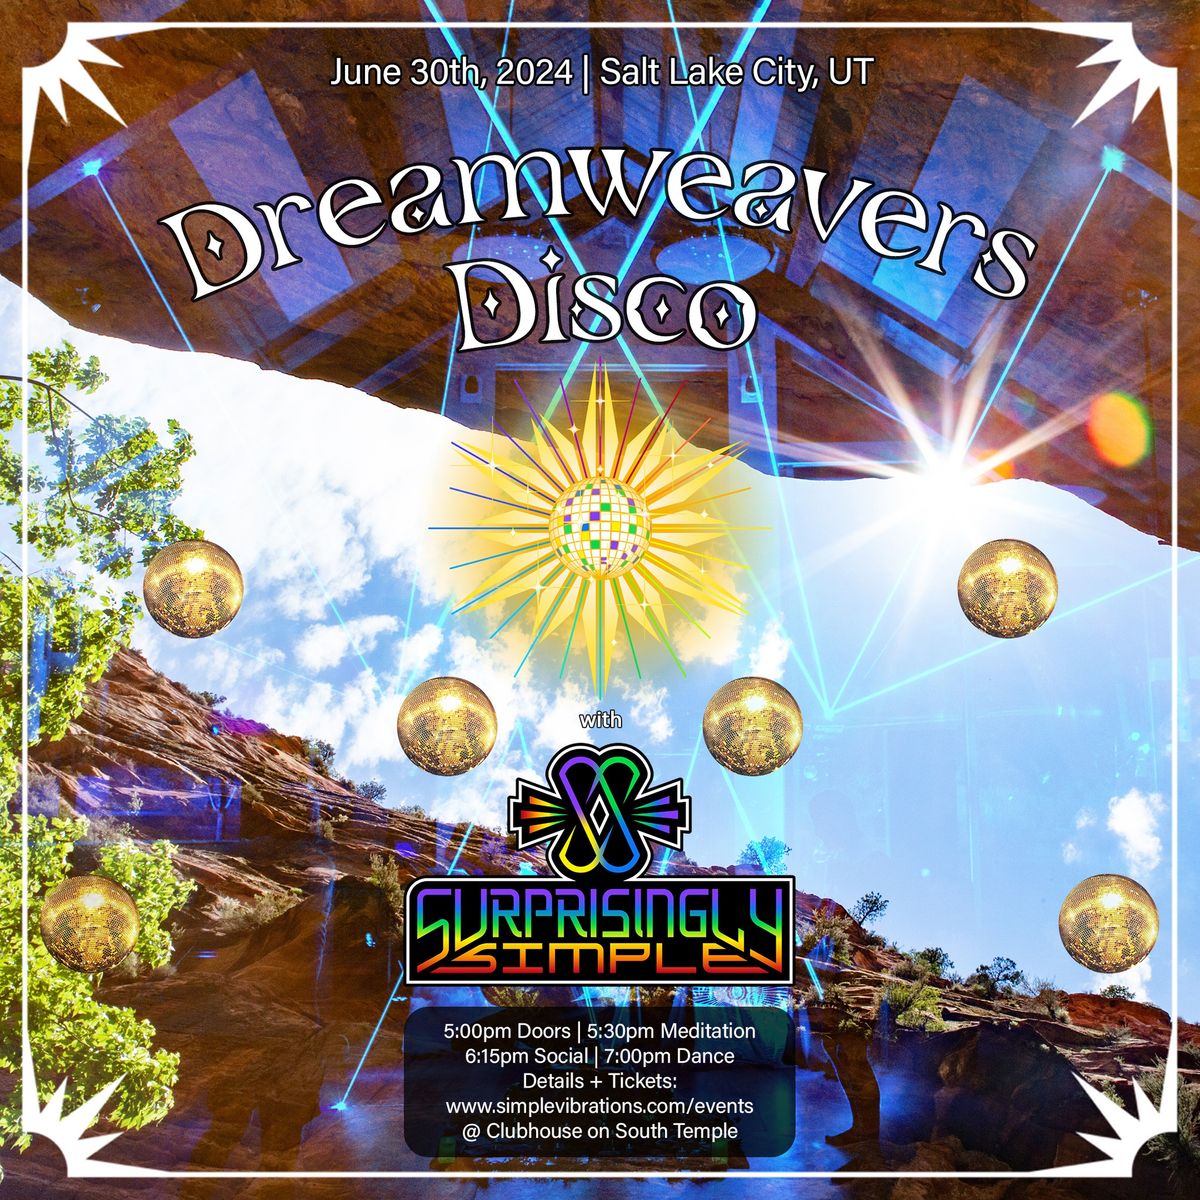 Dreamweavers Disco - Salt Lake City, UT